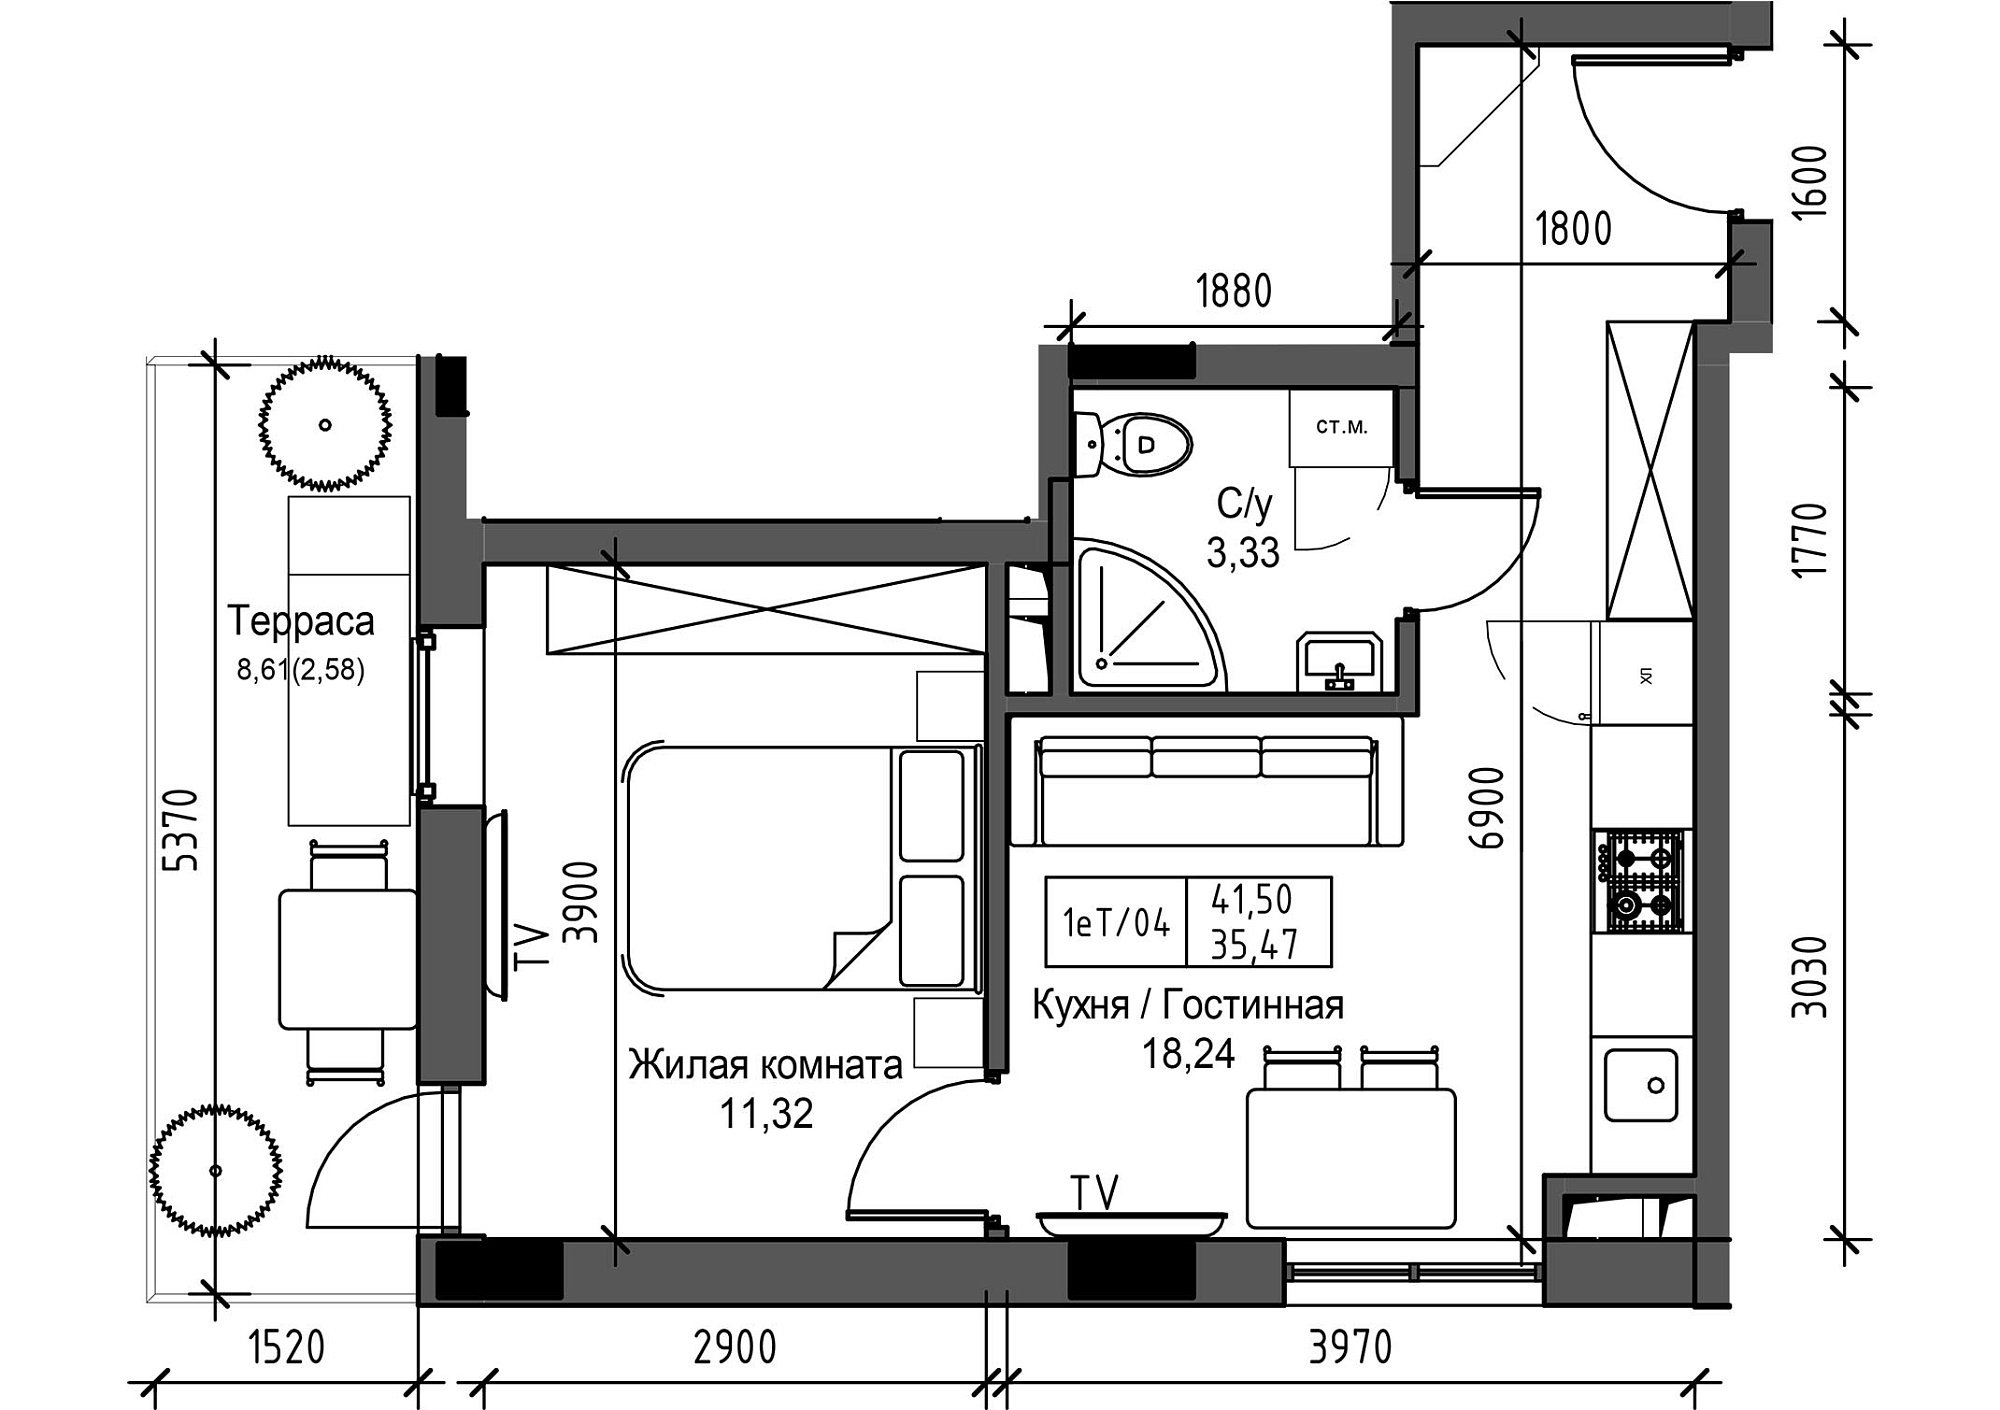 Планування 1-к квартира площею 35.47м2, UM-003-09/0097.